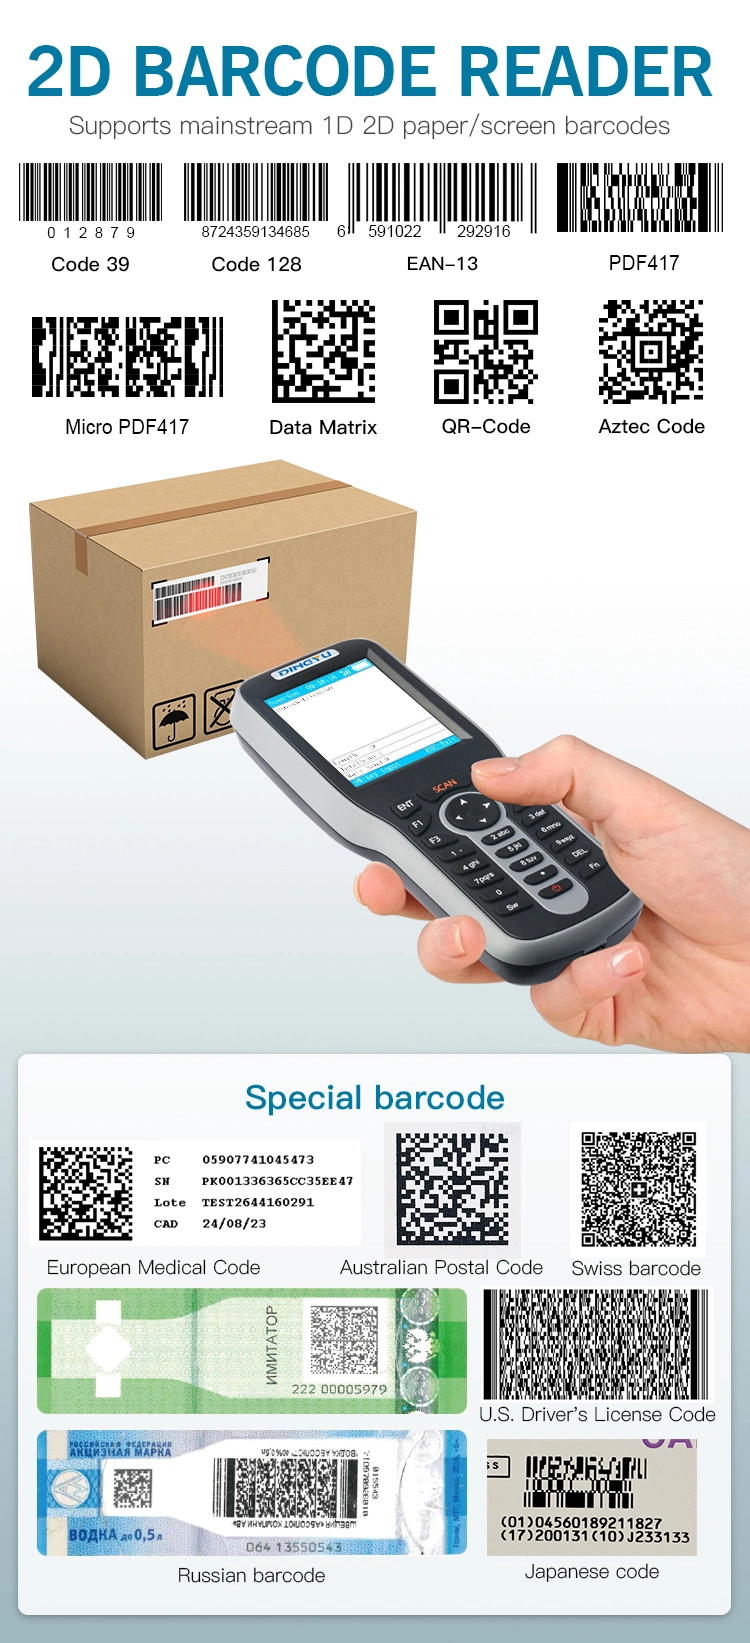 Portable Handheld PDA Scanner 1d 2D Barcode Wireless 2.4G Data Collector